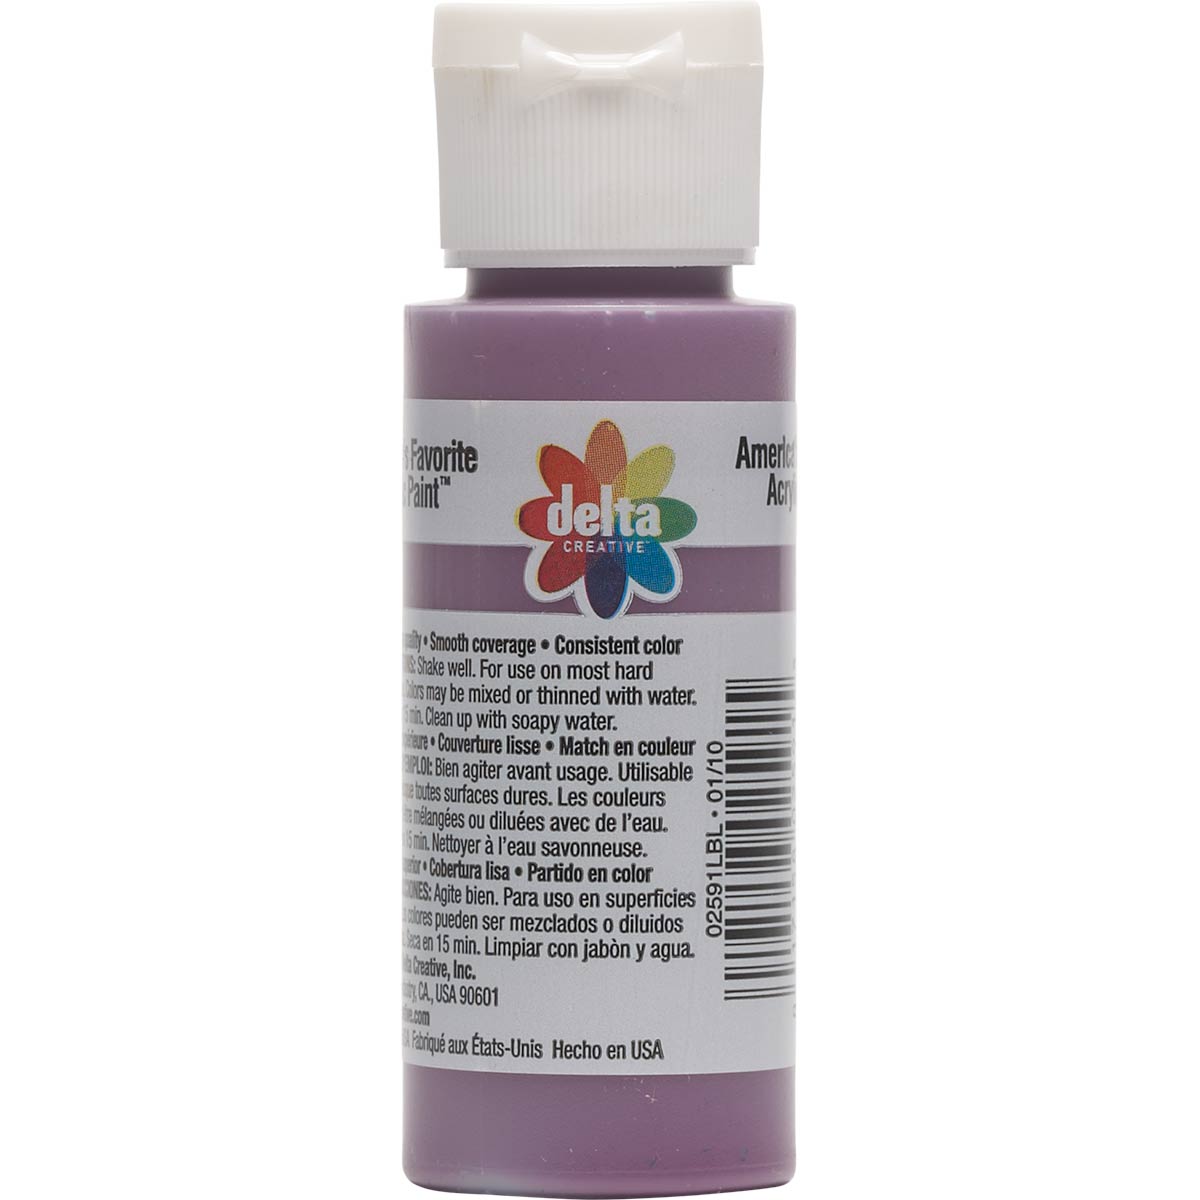 Delta Ceramcoat Acrylic Paint - Amethyst, 2 oz. - 025910202W